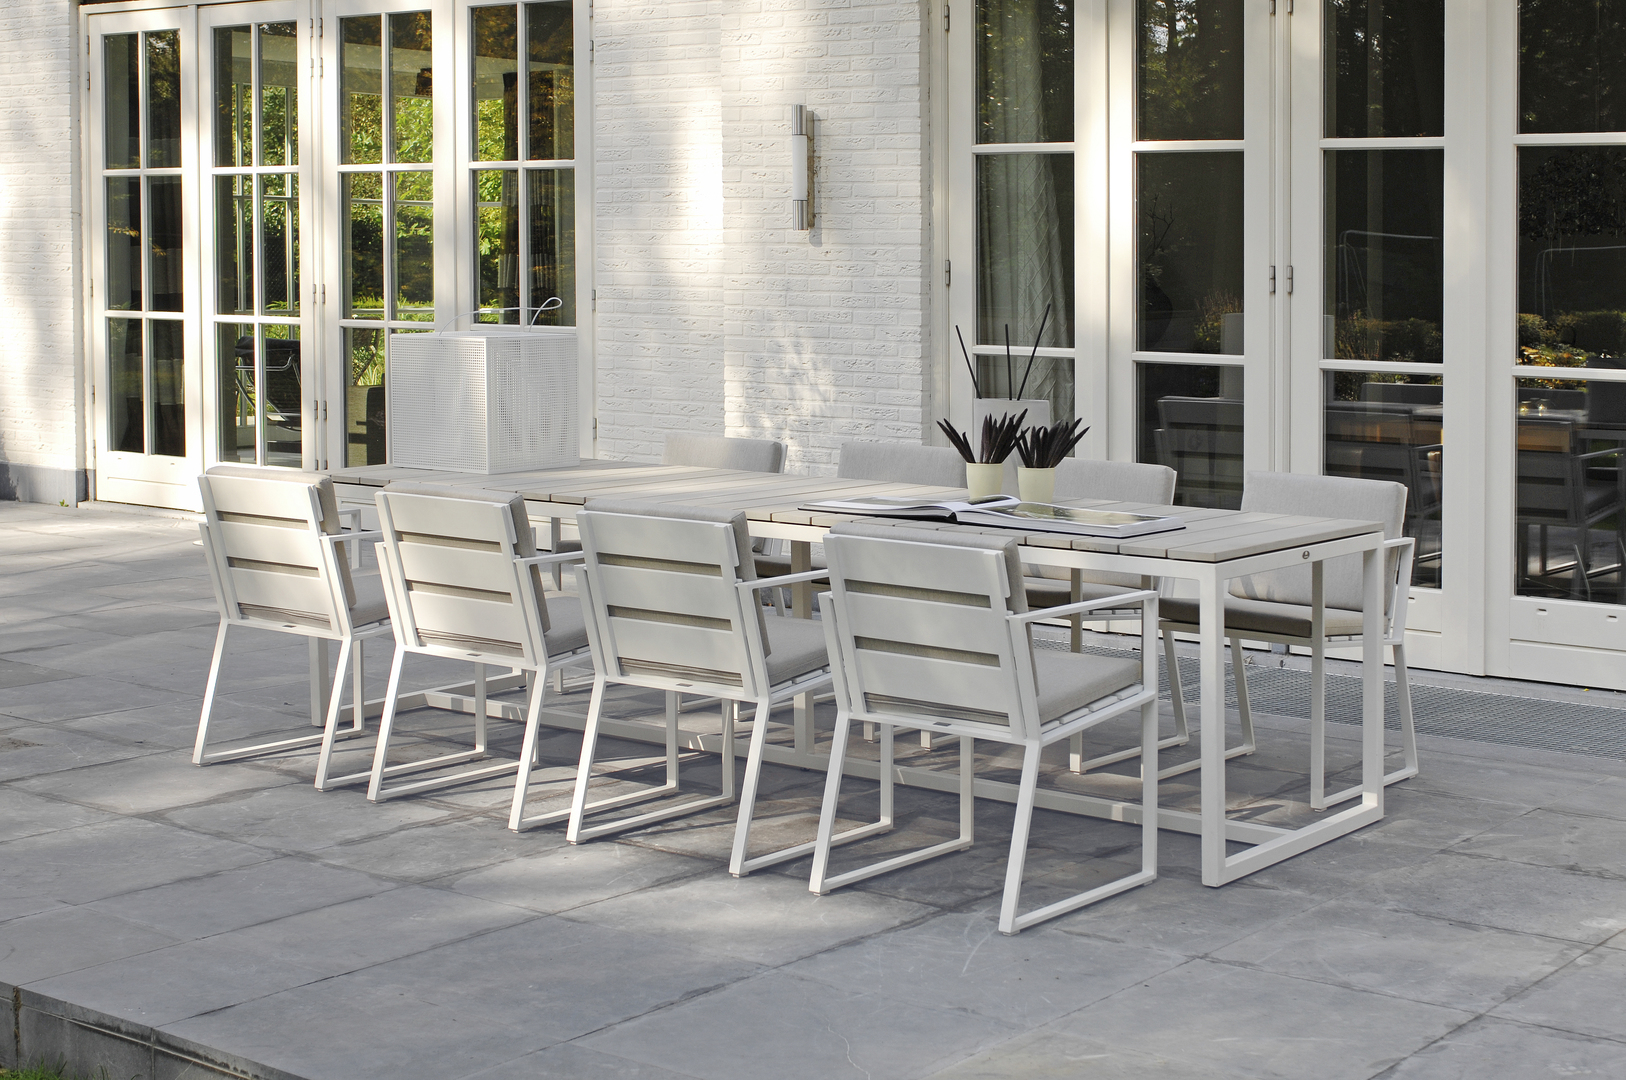 Borek Aluminium Samos chair Venice table-1.jpg